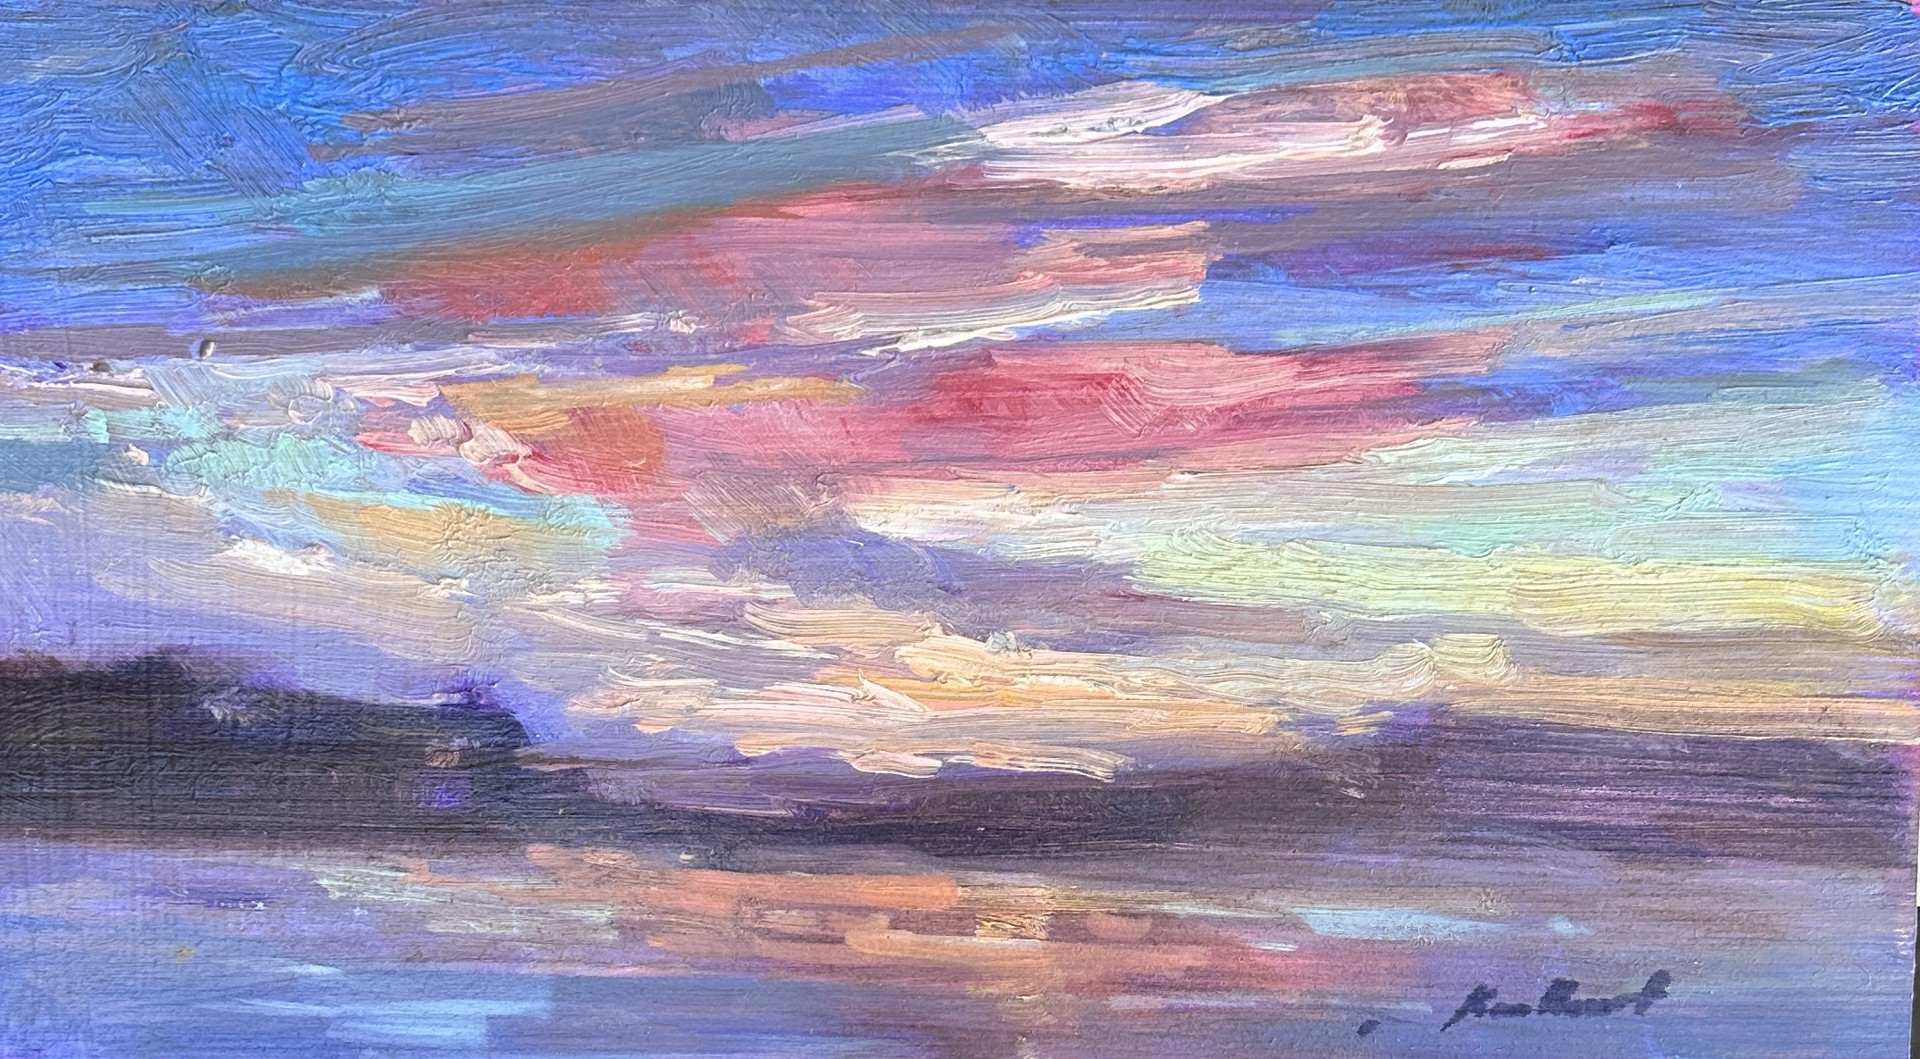 Sunset painting 